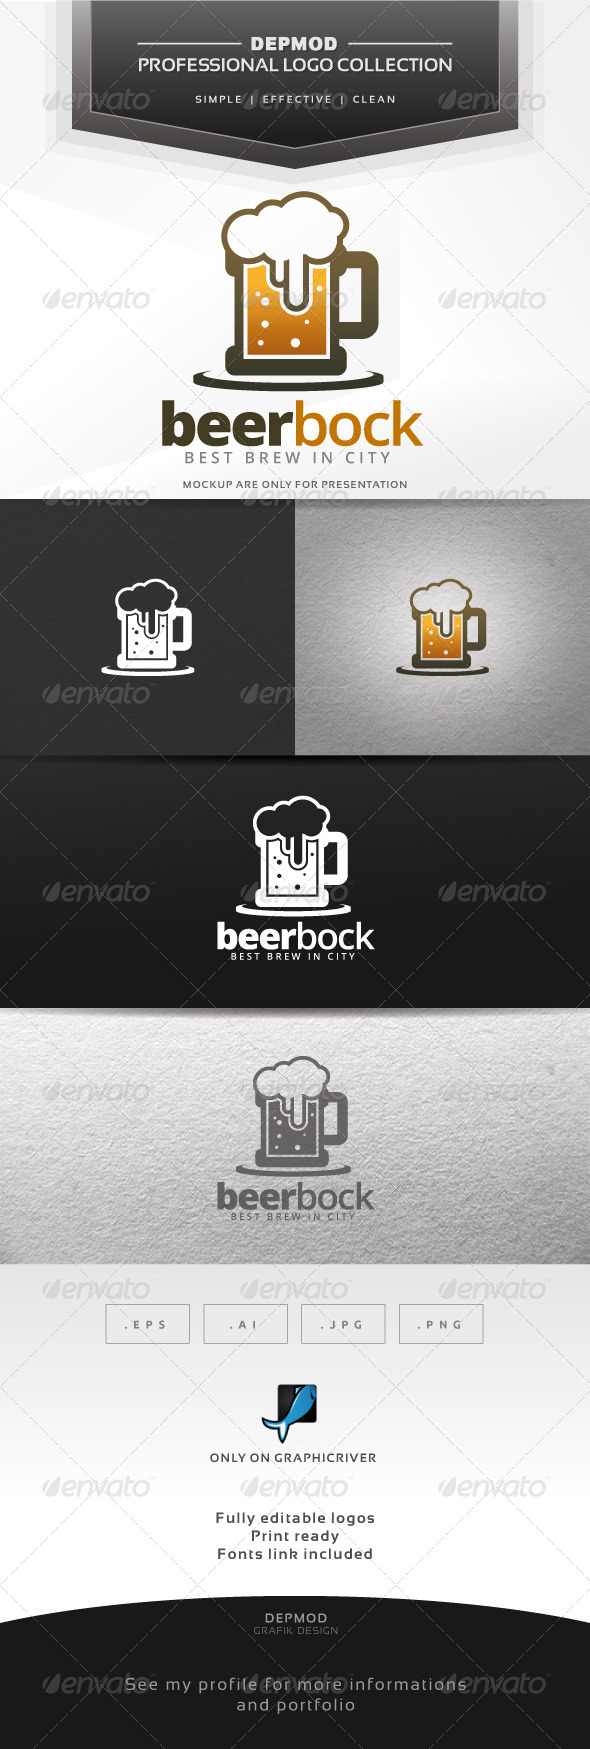 Beer Bock Logo